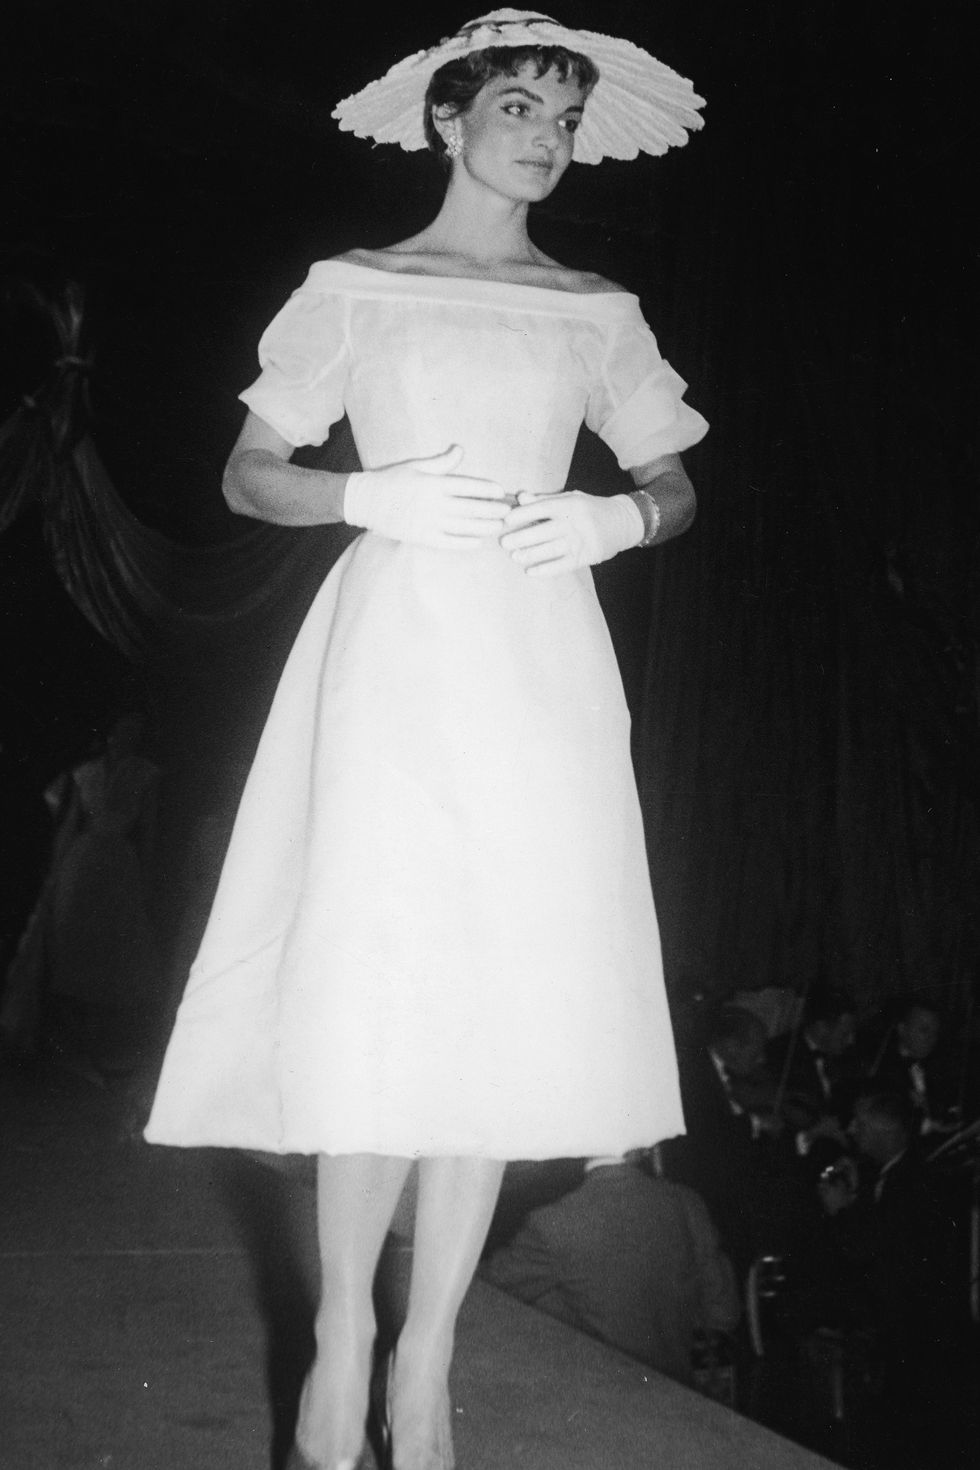 Jackie Kennedy's fashion resonates in southern Seoul